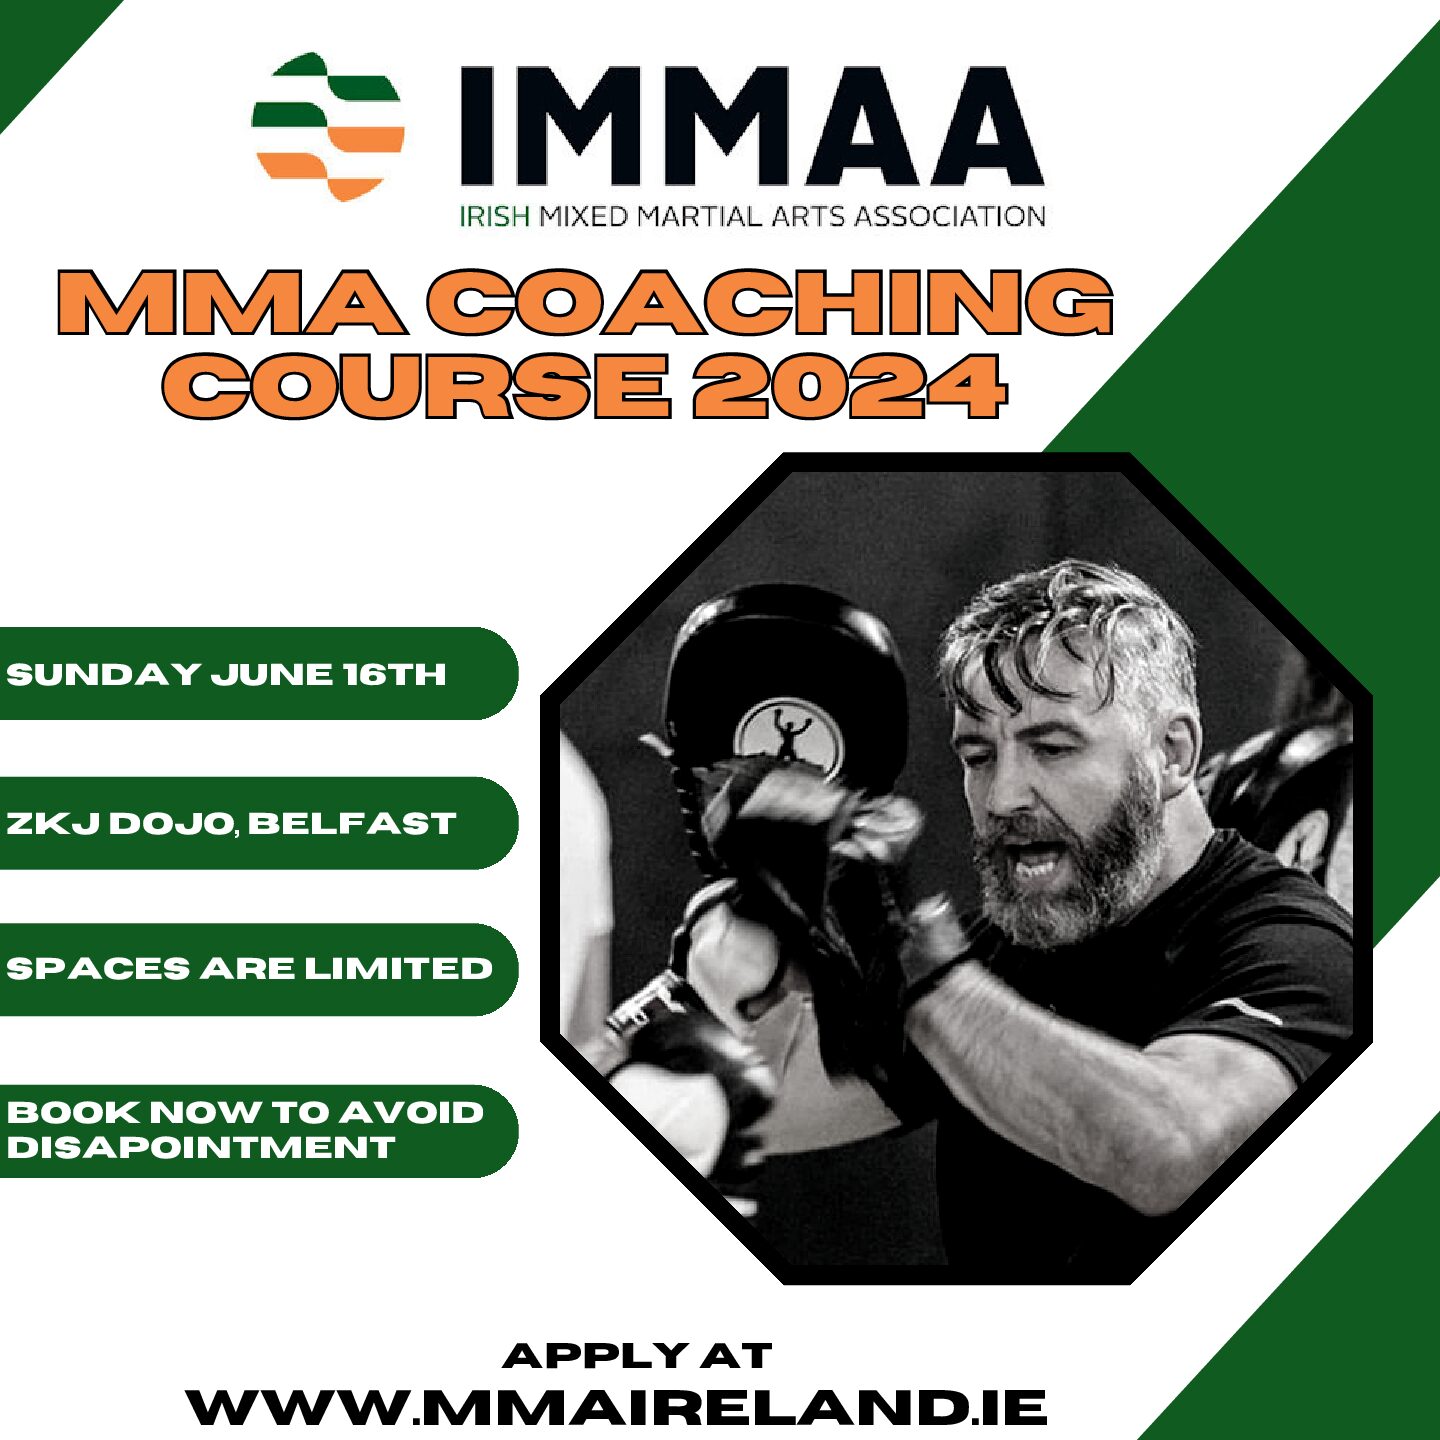 IMMAA Coaching Course June 16th